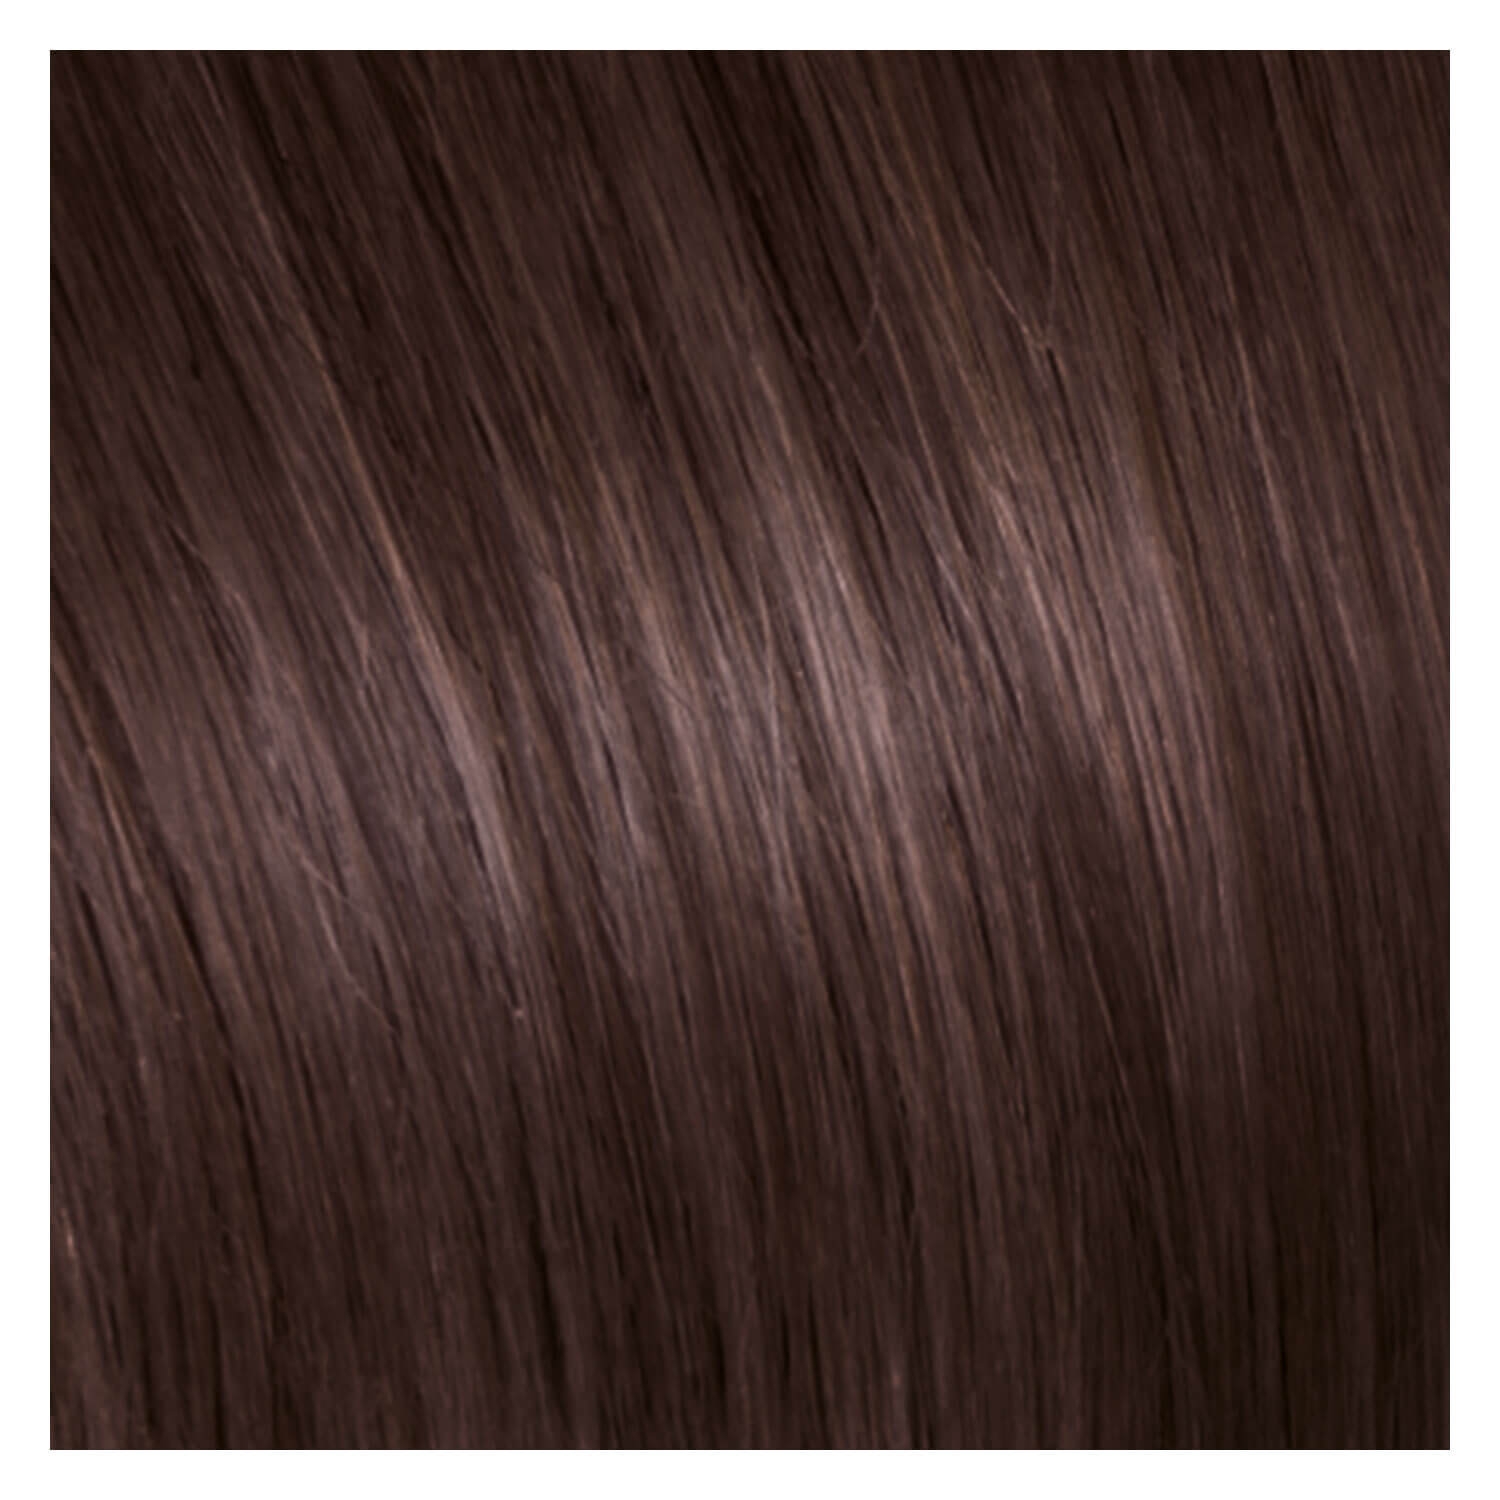 Produktbild von SHE Bonding-System Hair Extensions Straight - 6 Helles Kastanienbraun 55/60cm